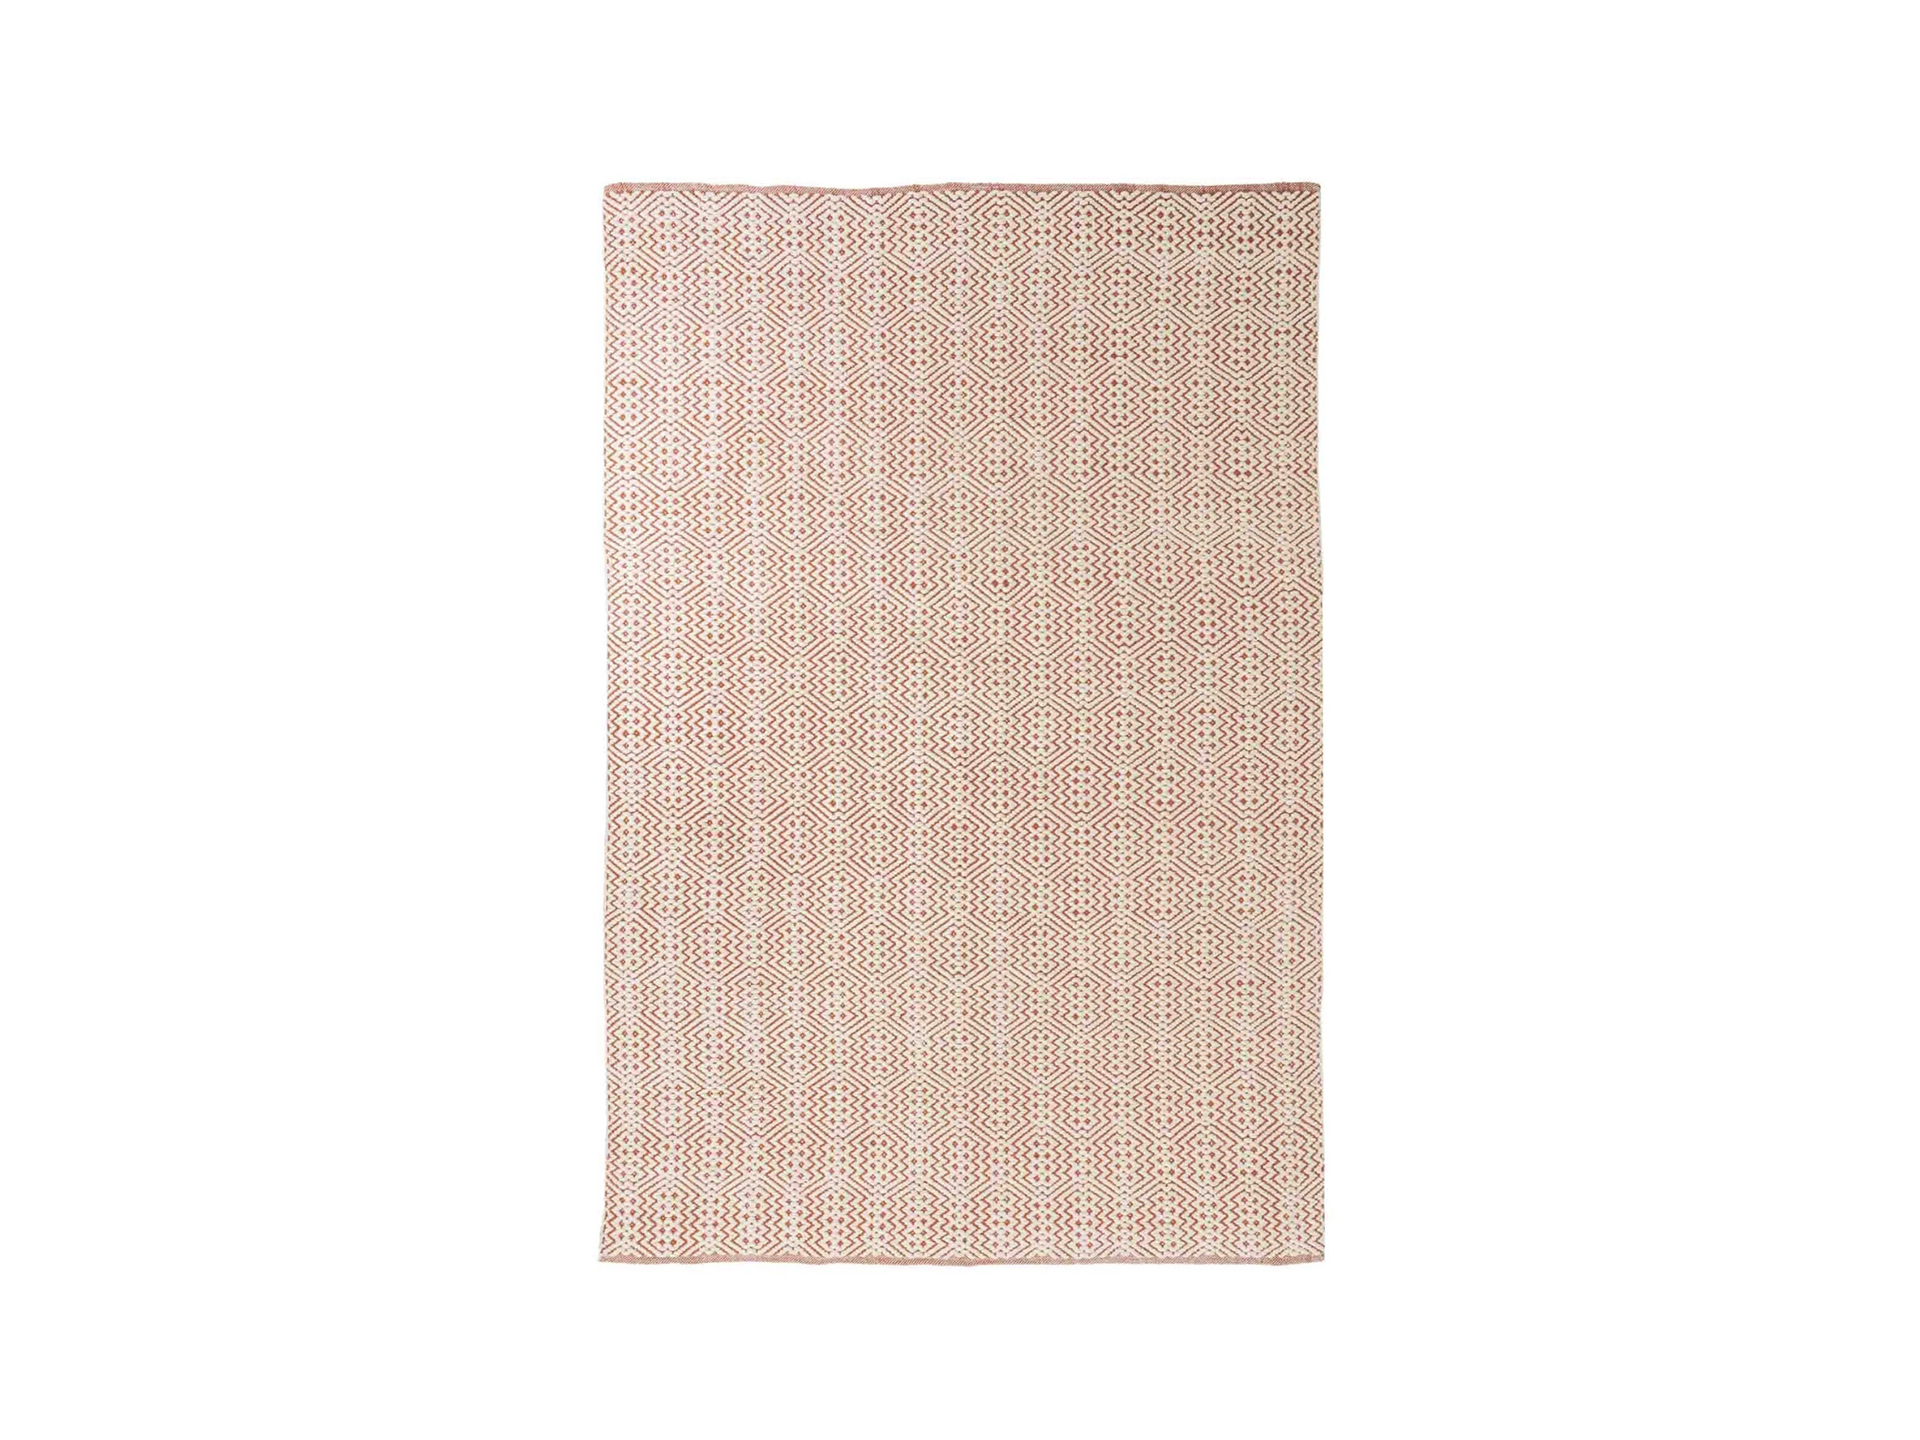 Ibiza koberec 140x200 cm korálově růžový